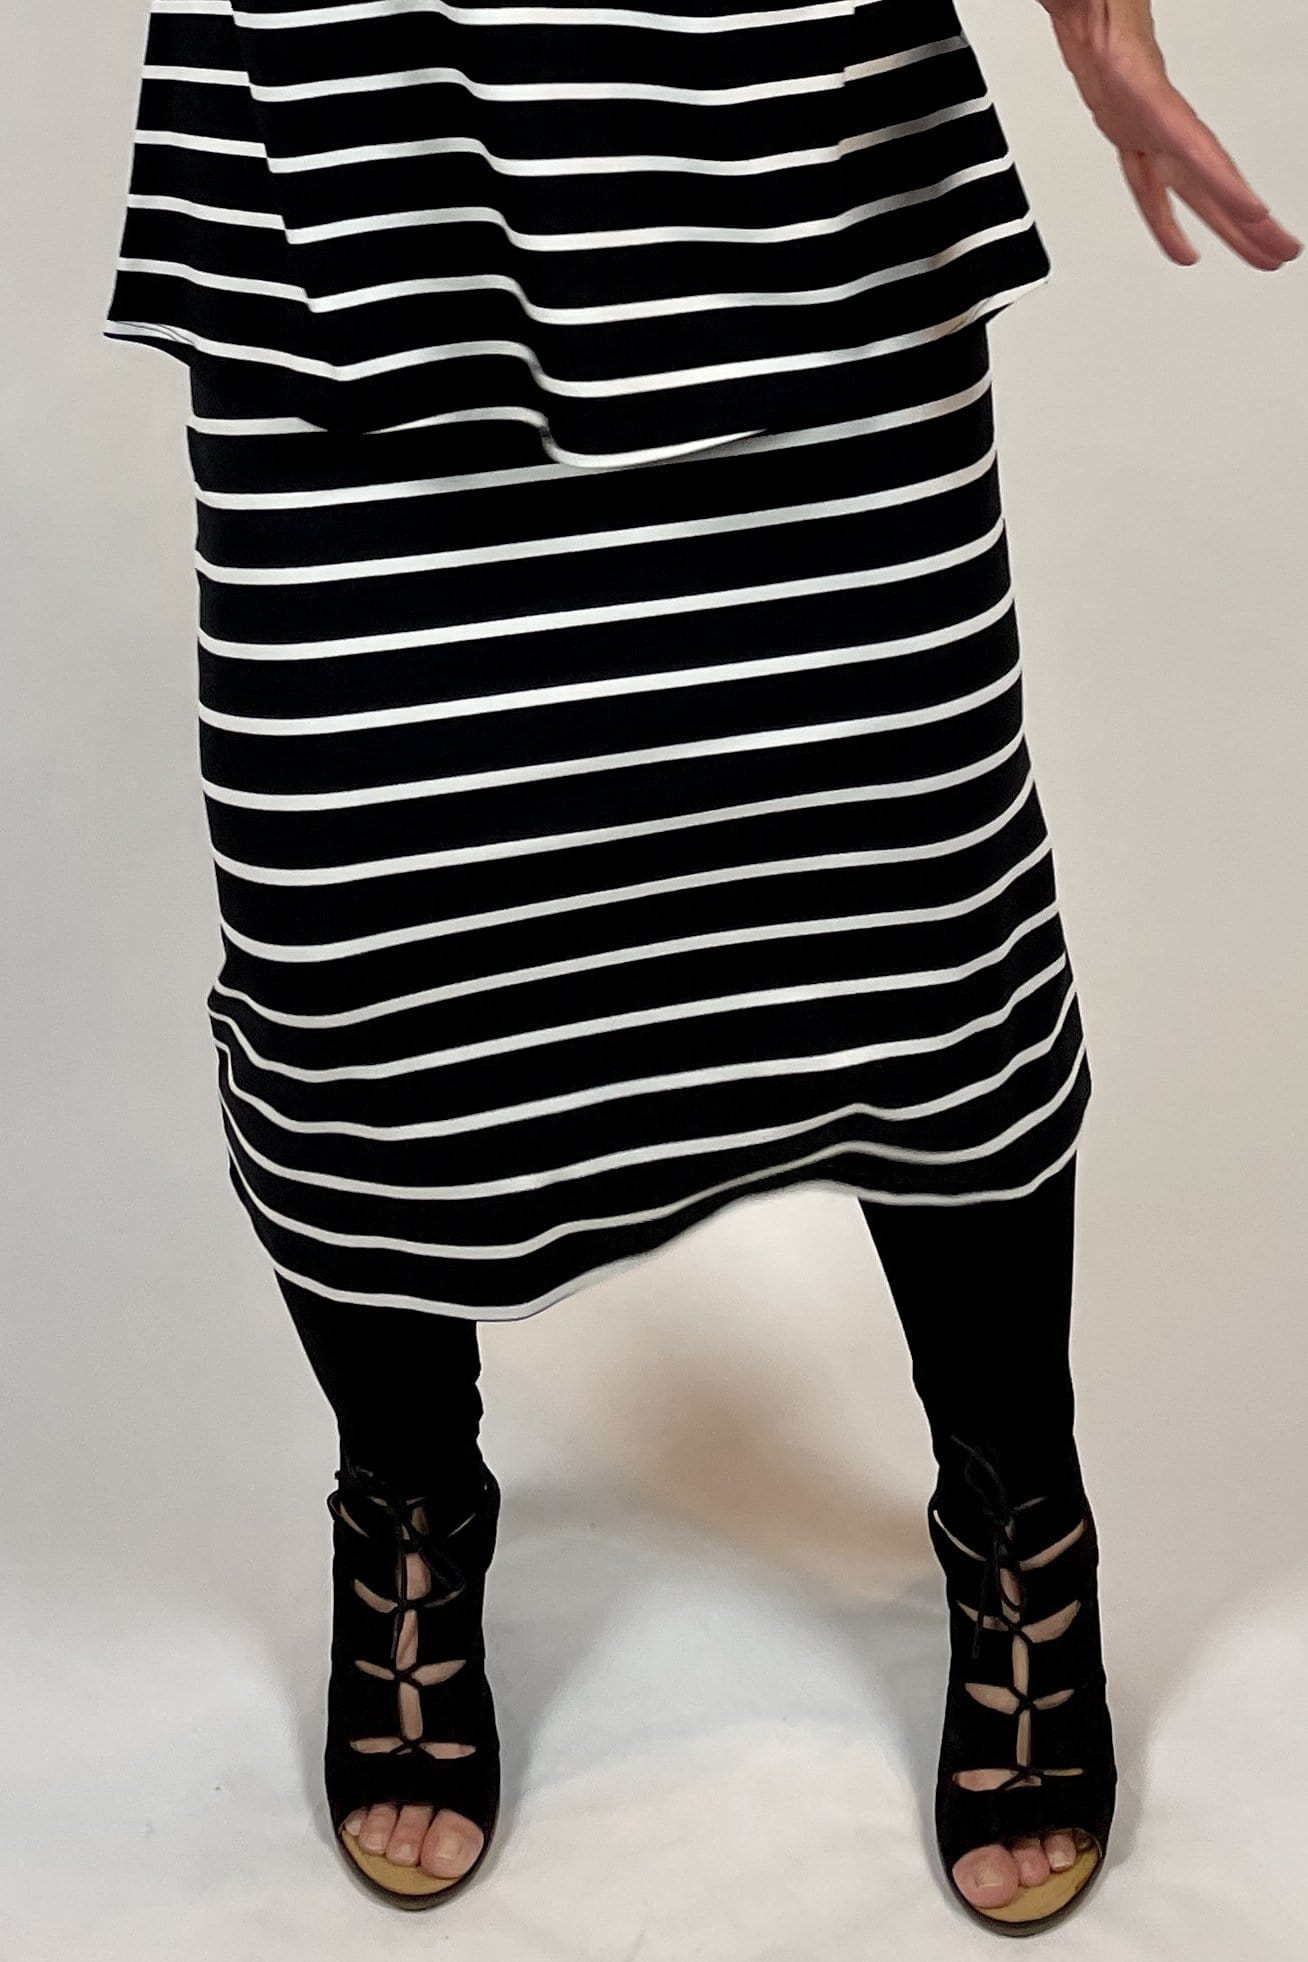 WEYRE Skirt midi skirt black and white stripe